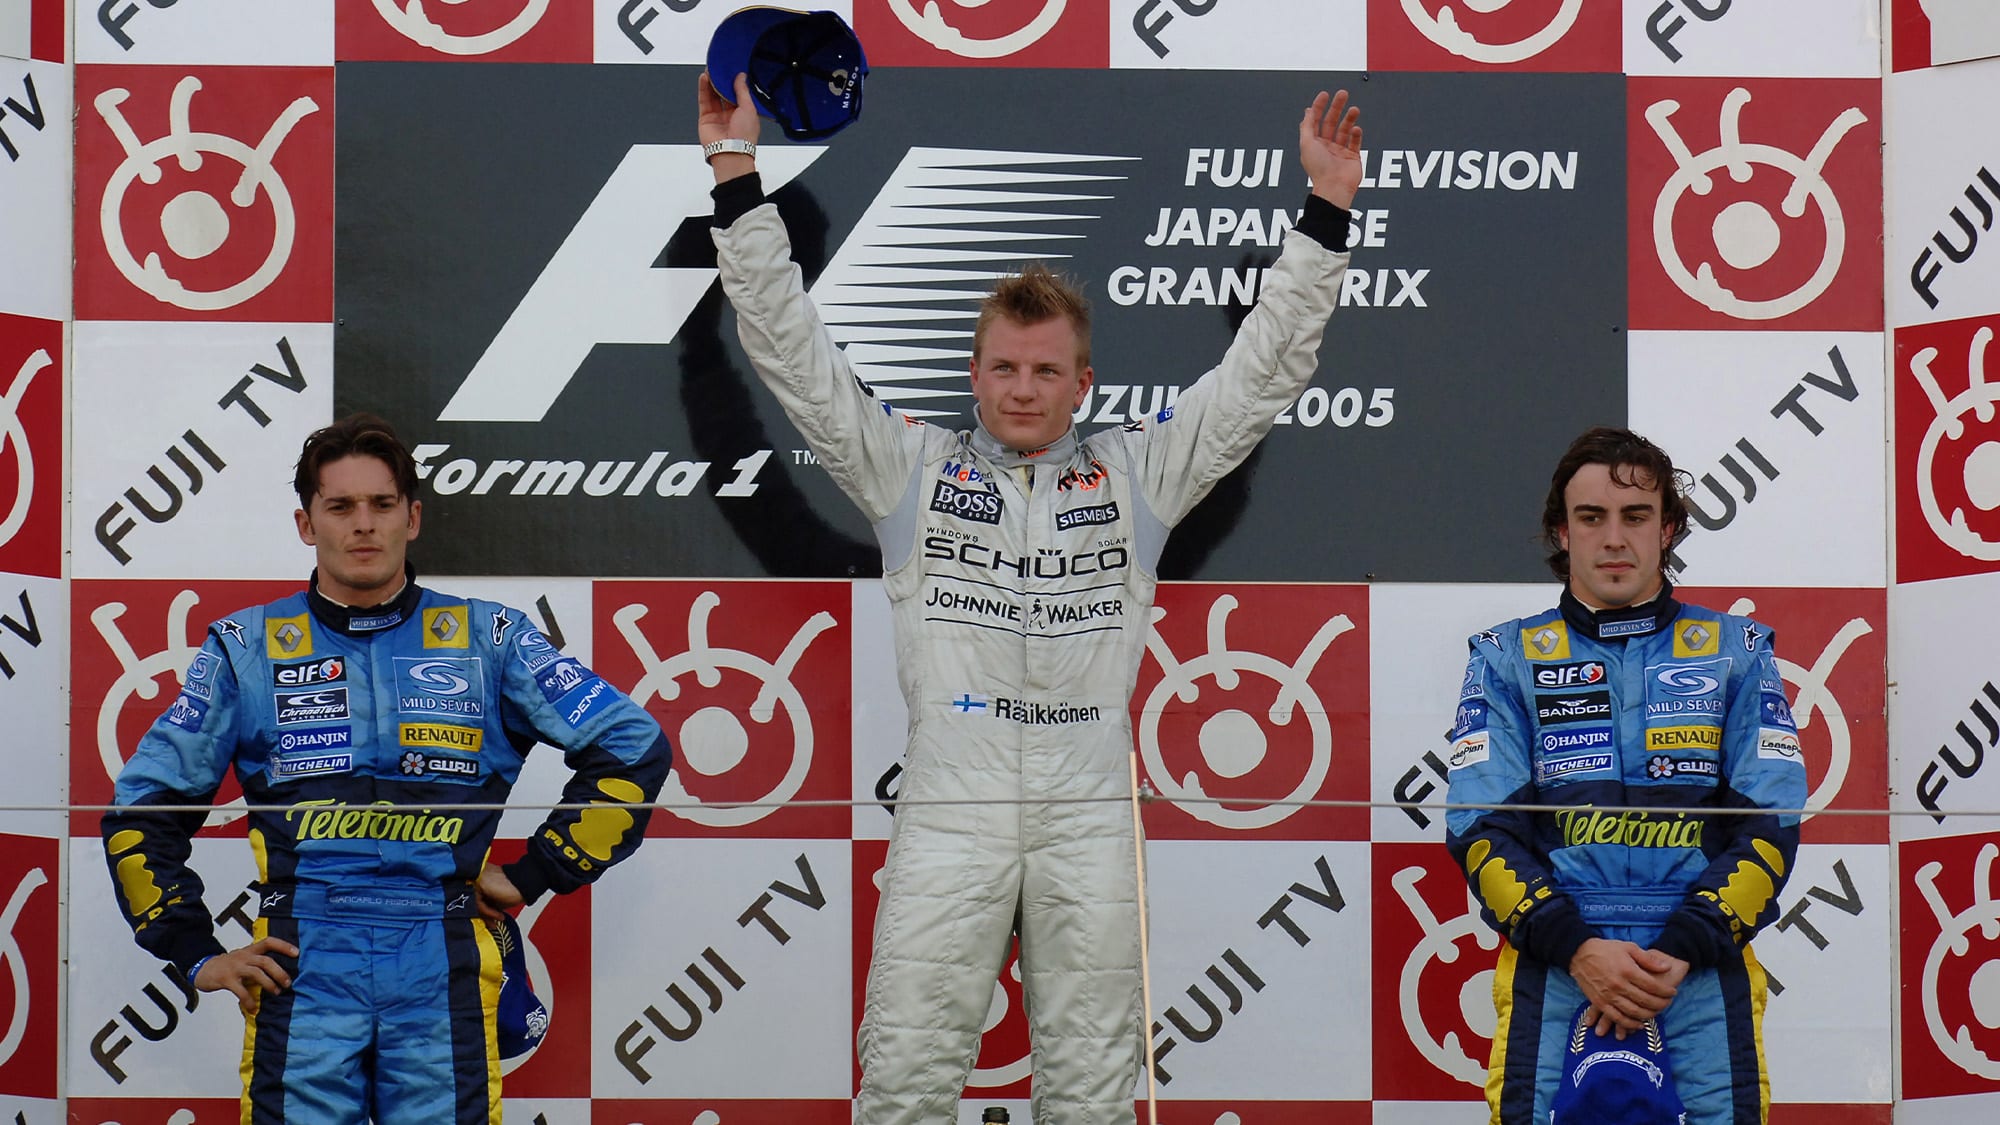 Kimi Raikkonen on the podium alongside Giancarlo Fisichella and Fernando Alonso after winning the 2005 F1 Japanese Grand prix at Suzuka